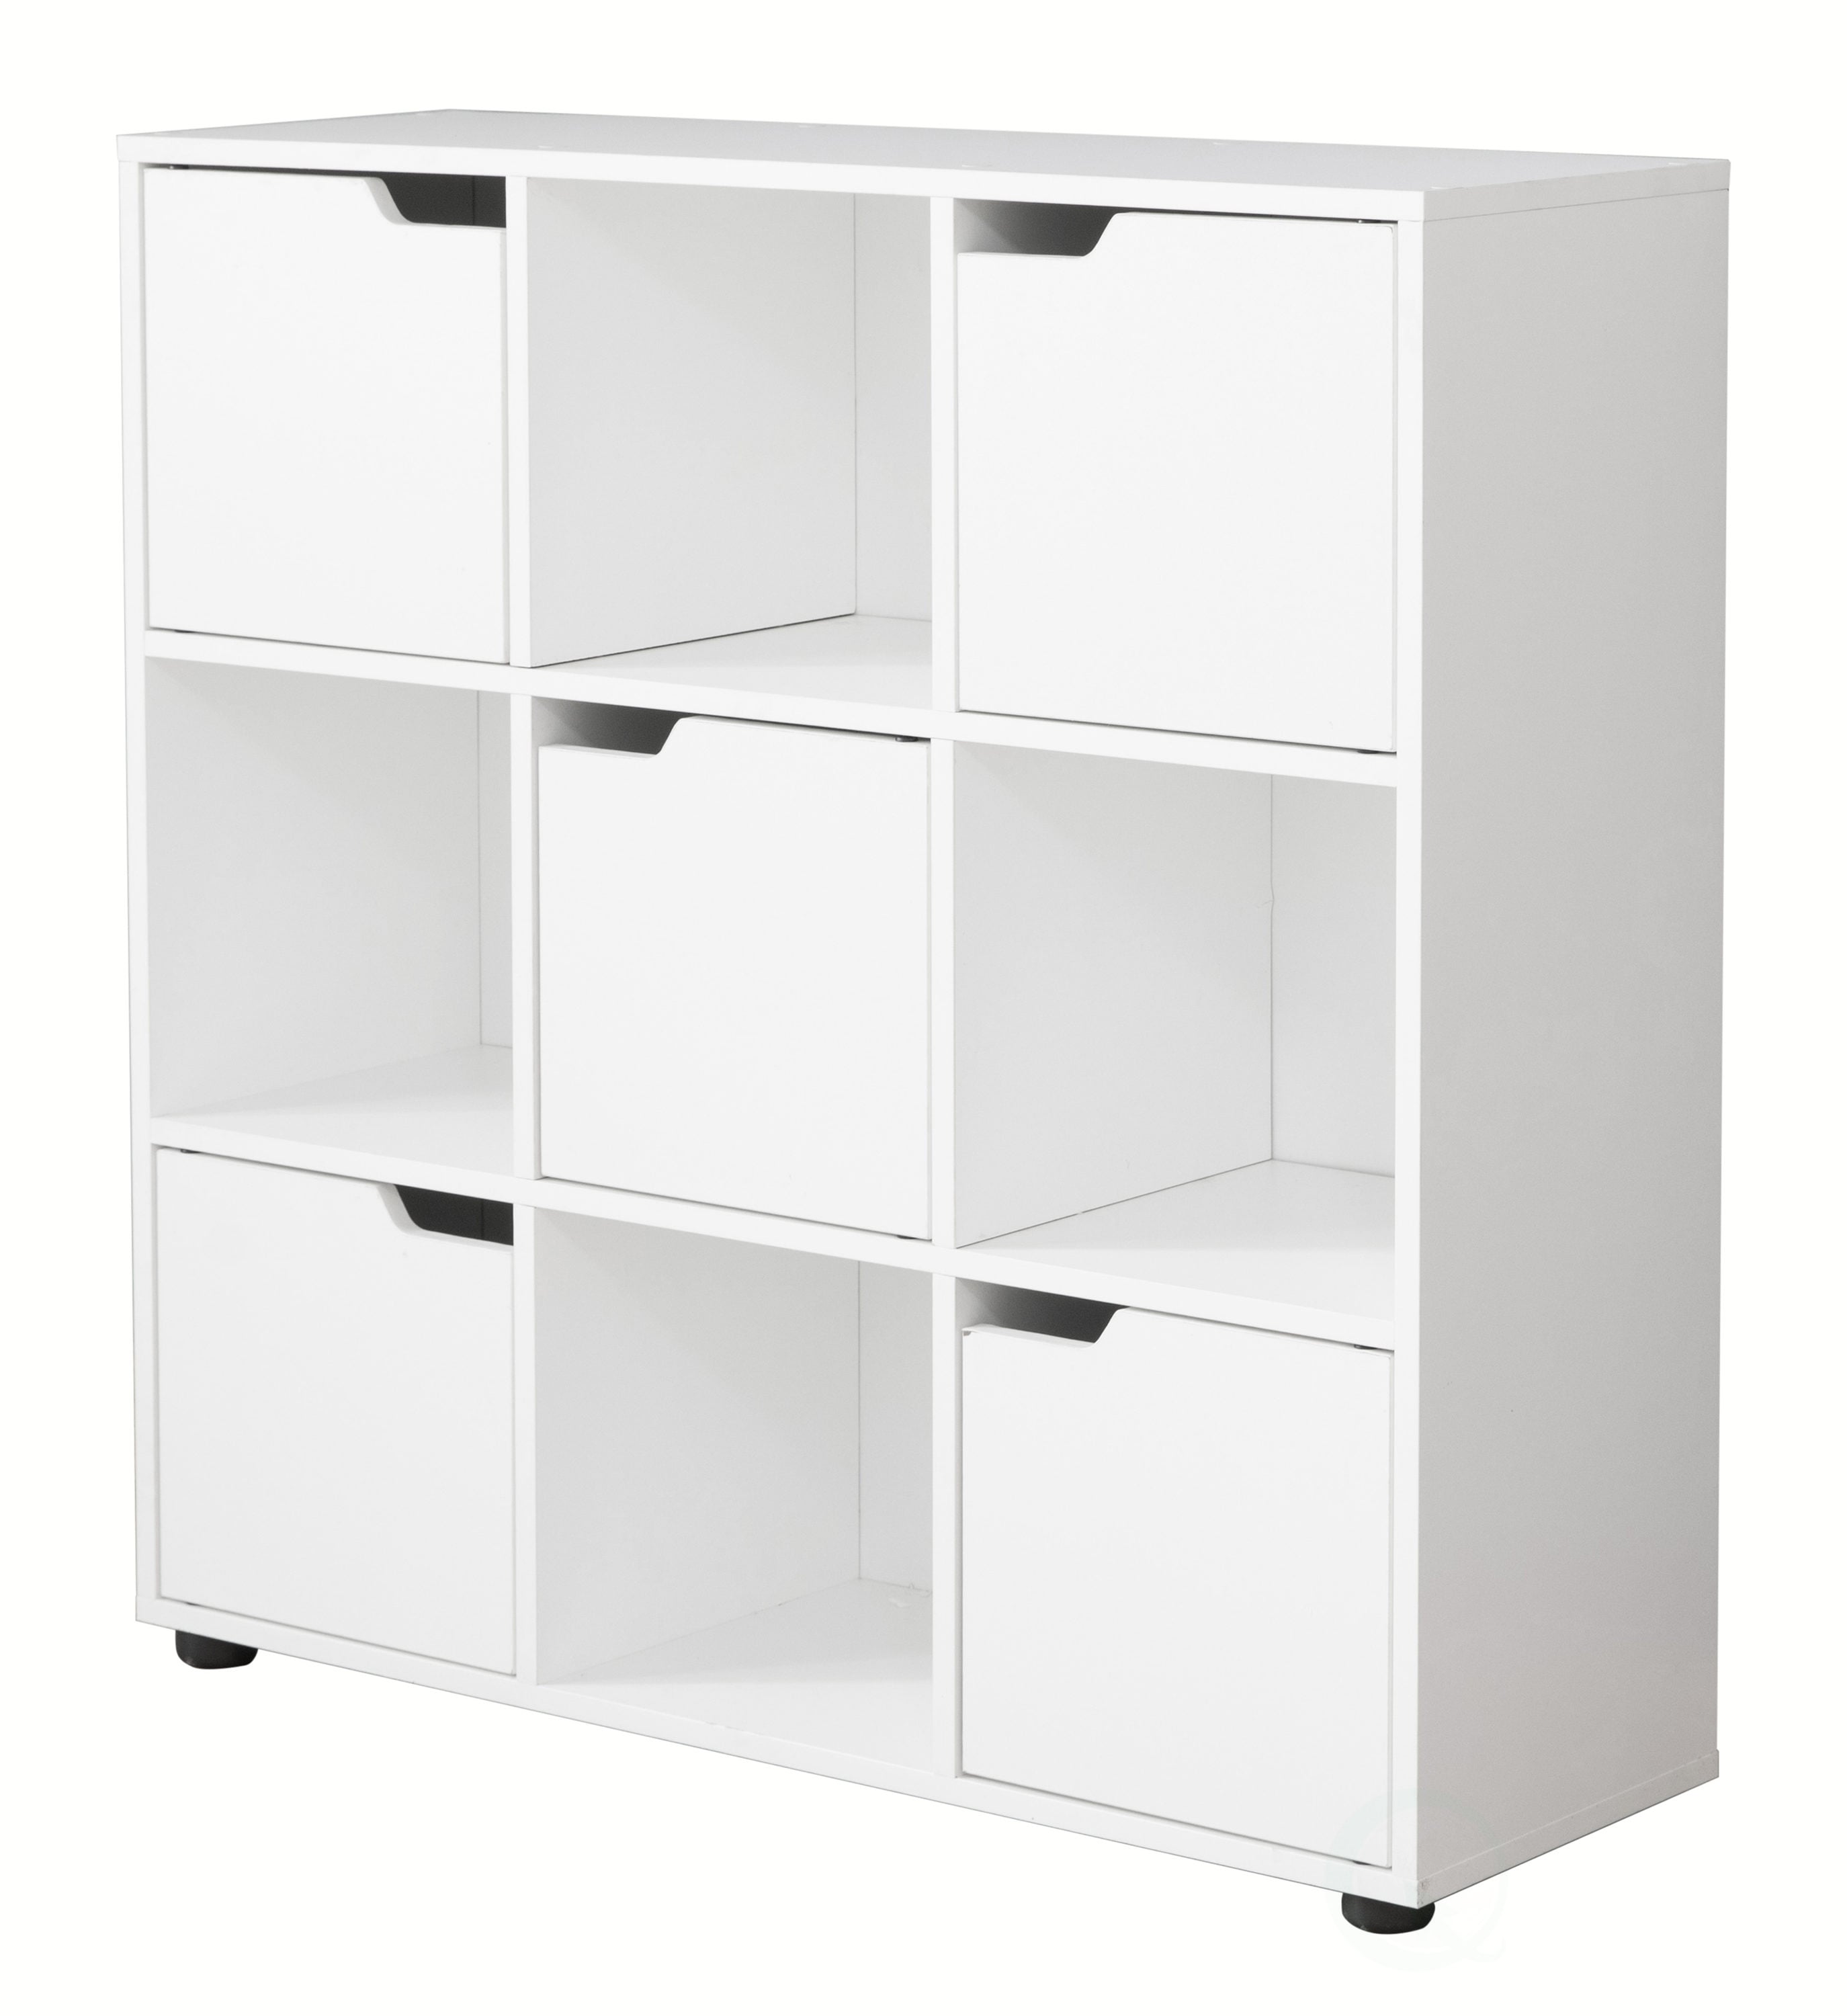 8-Cube Bookshelf Rack Bookcase Stand Storage Shelf Display Cabinet Shelves White